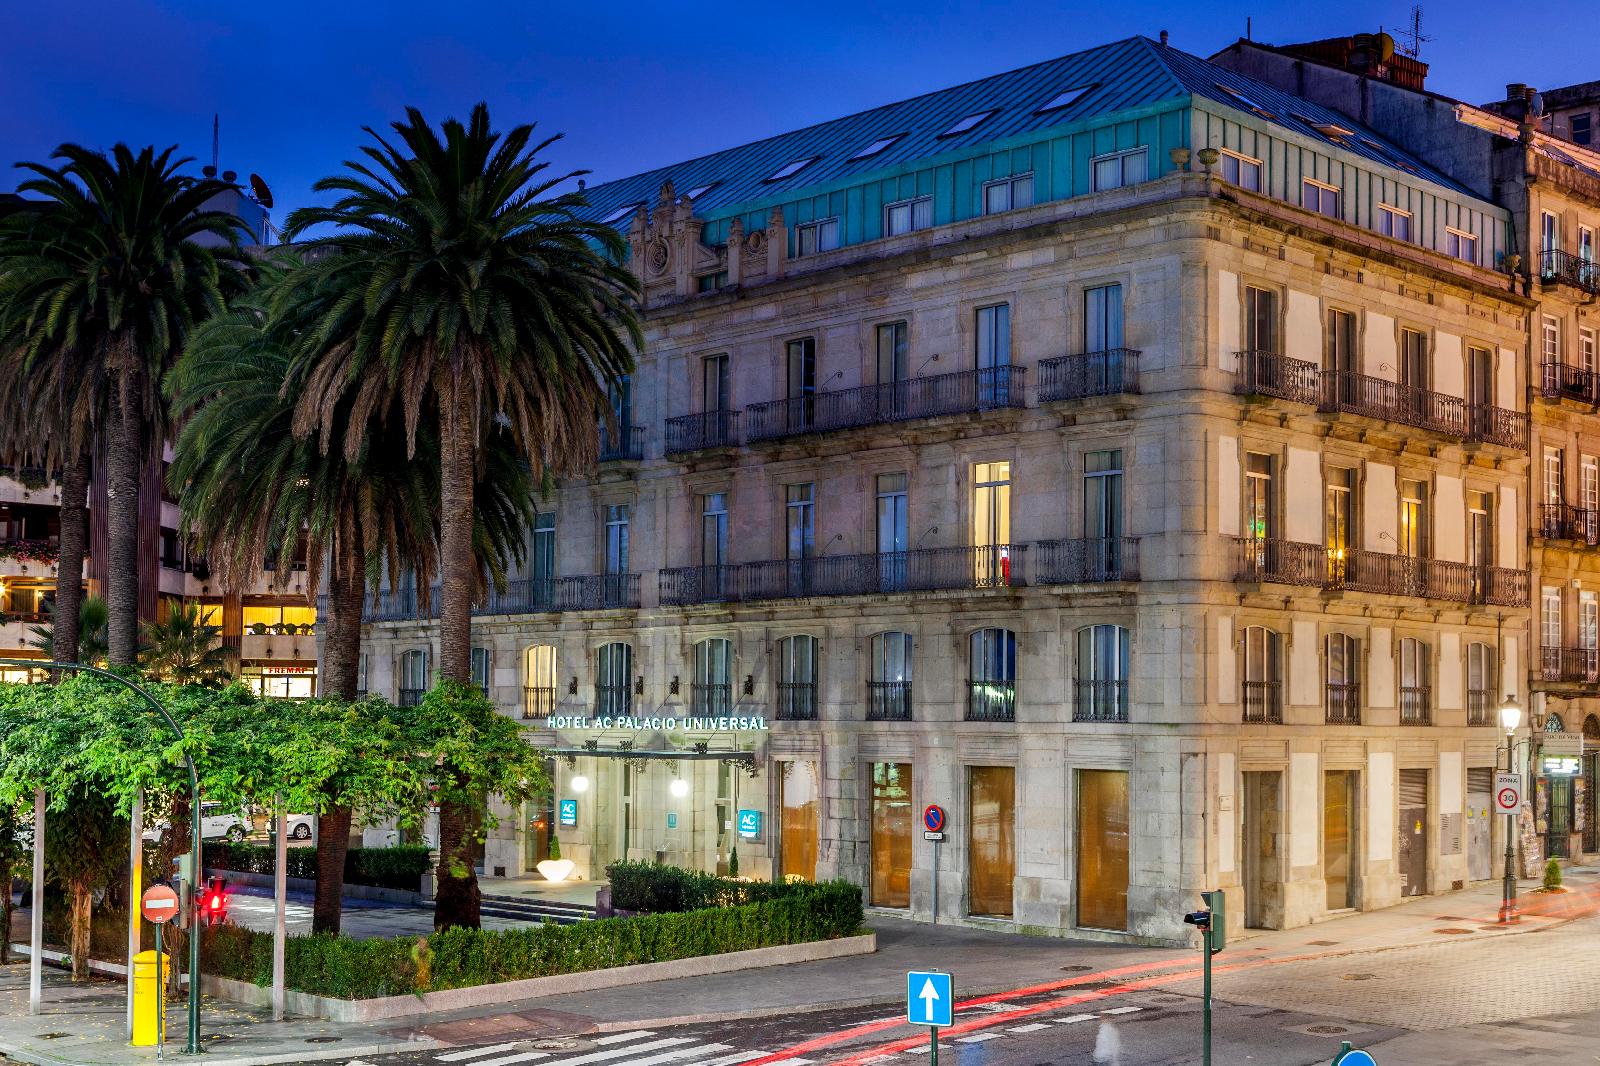 19. Ac Hotel Palacio Universal By Marriott